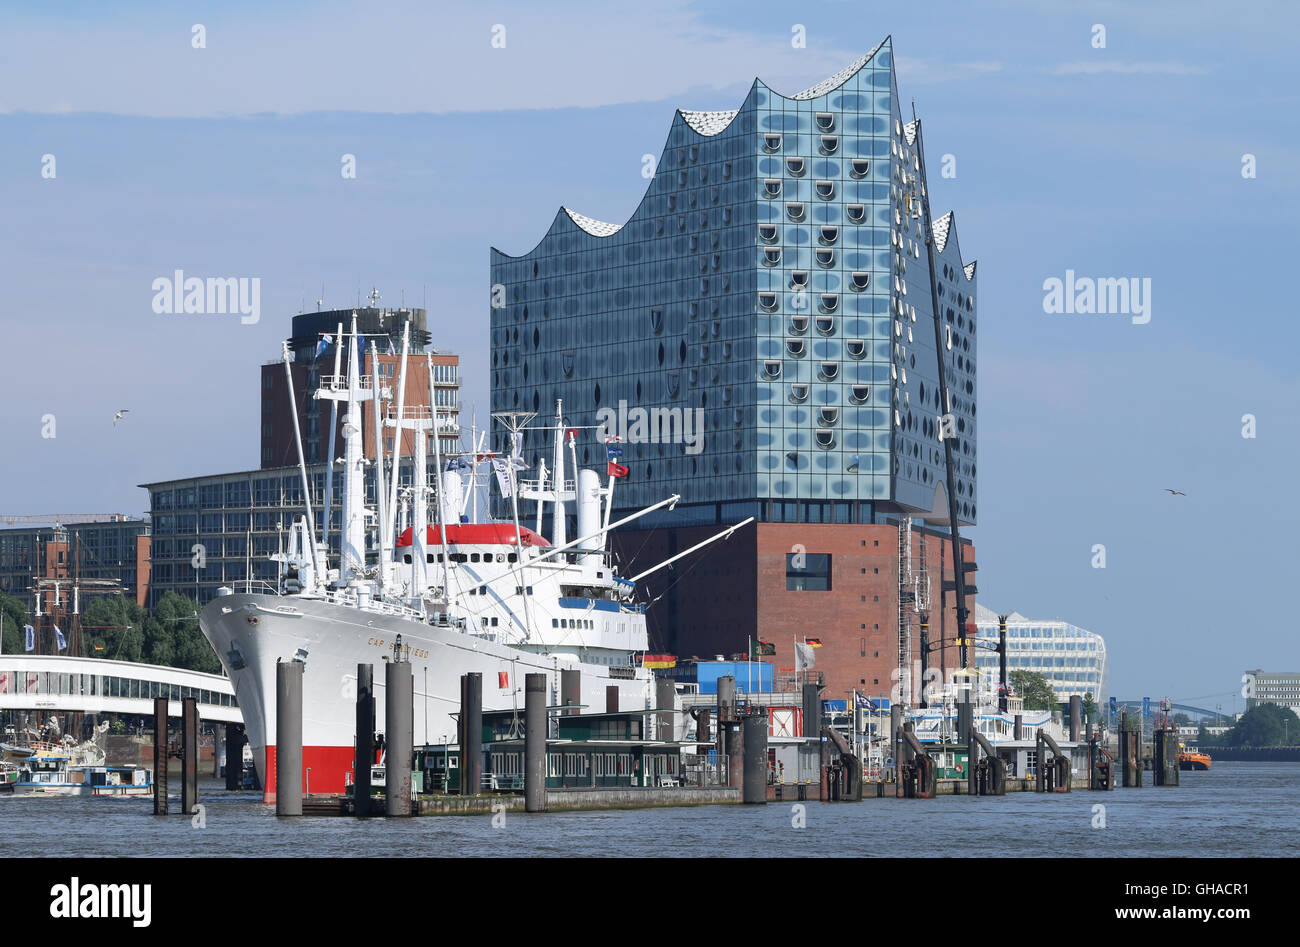 Hamburg waterfront. Elbphilharmonie concert hall and museum ship Cap ...